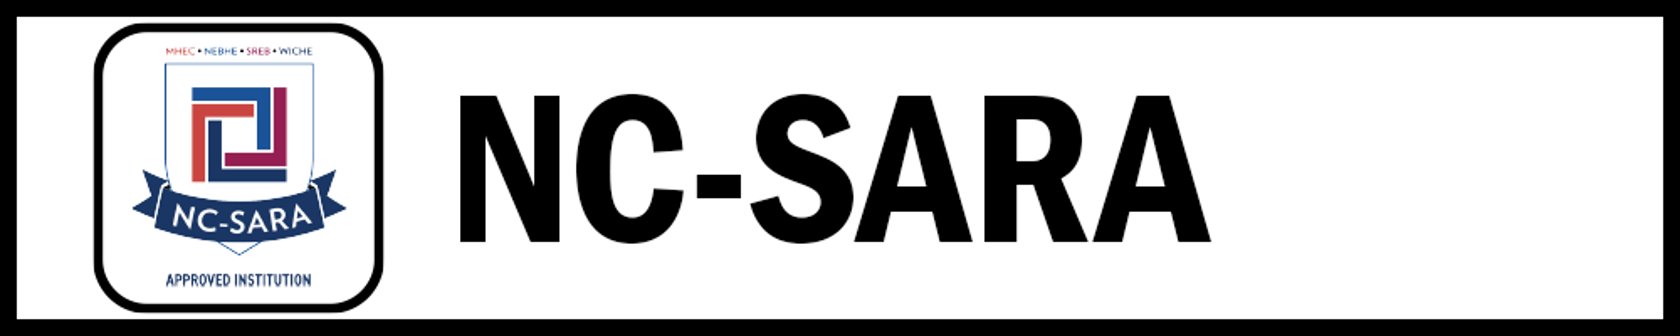 NC-SARA Button